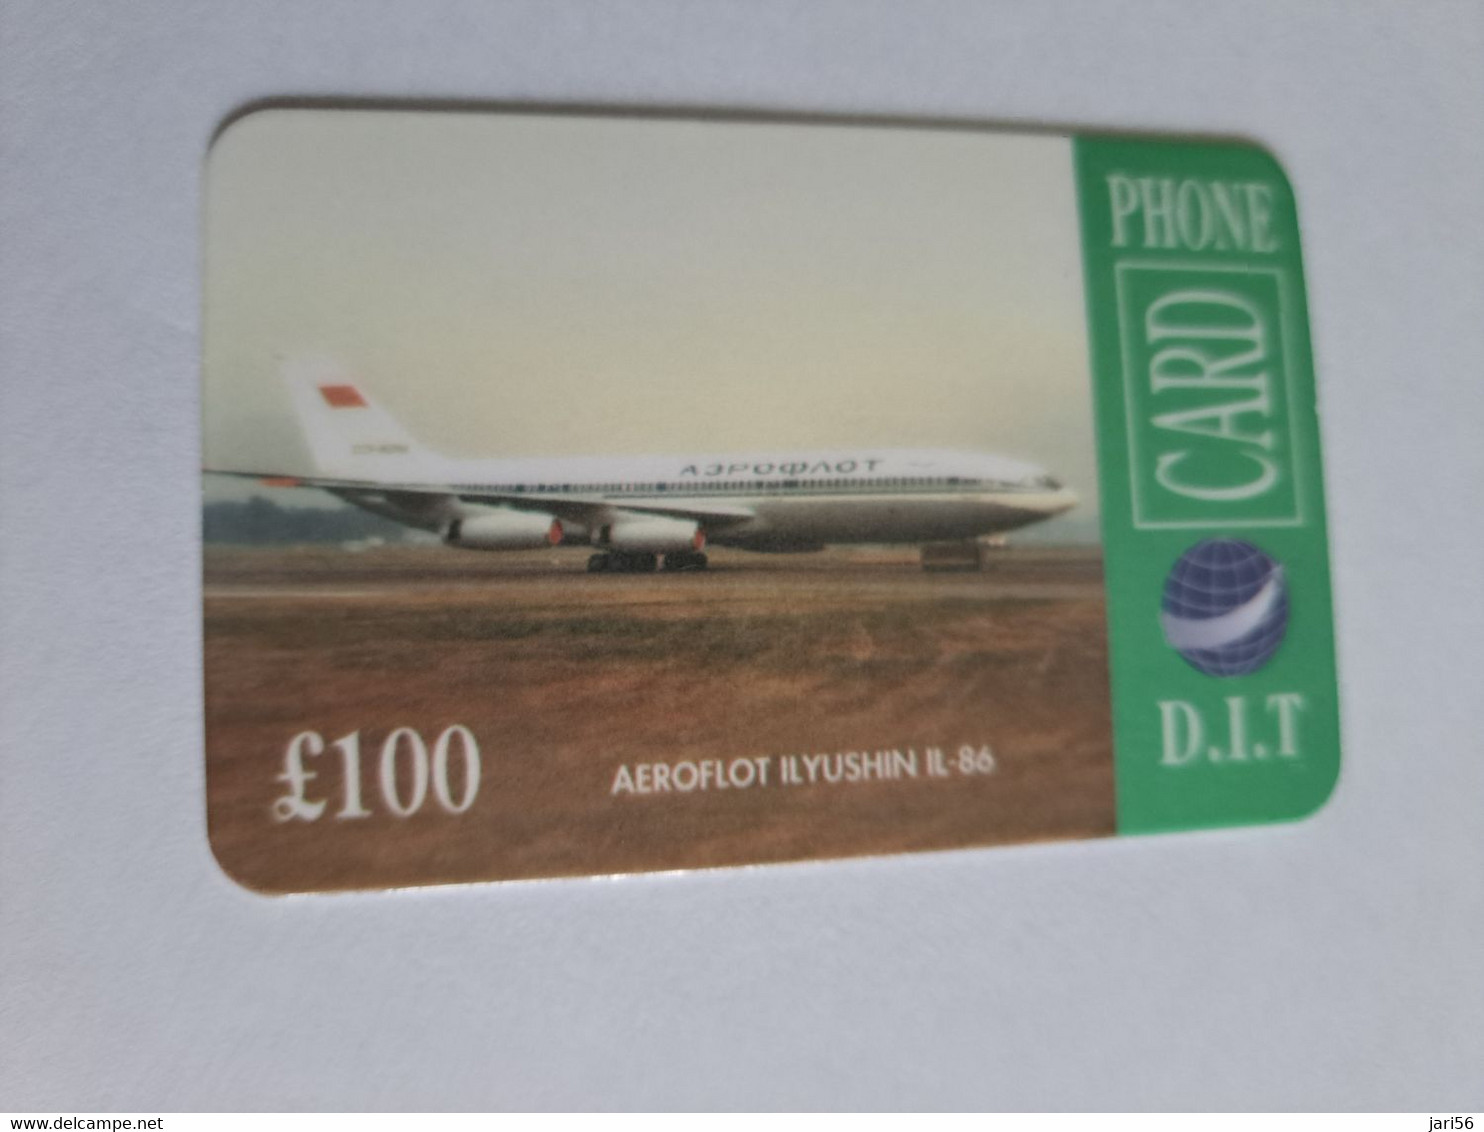 GREAT BRITAIN   100 POUND   / AEROFLOT YUSHIN FL 86    DIT PHONECARD    PREPAID CARD      **12902** - Collections